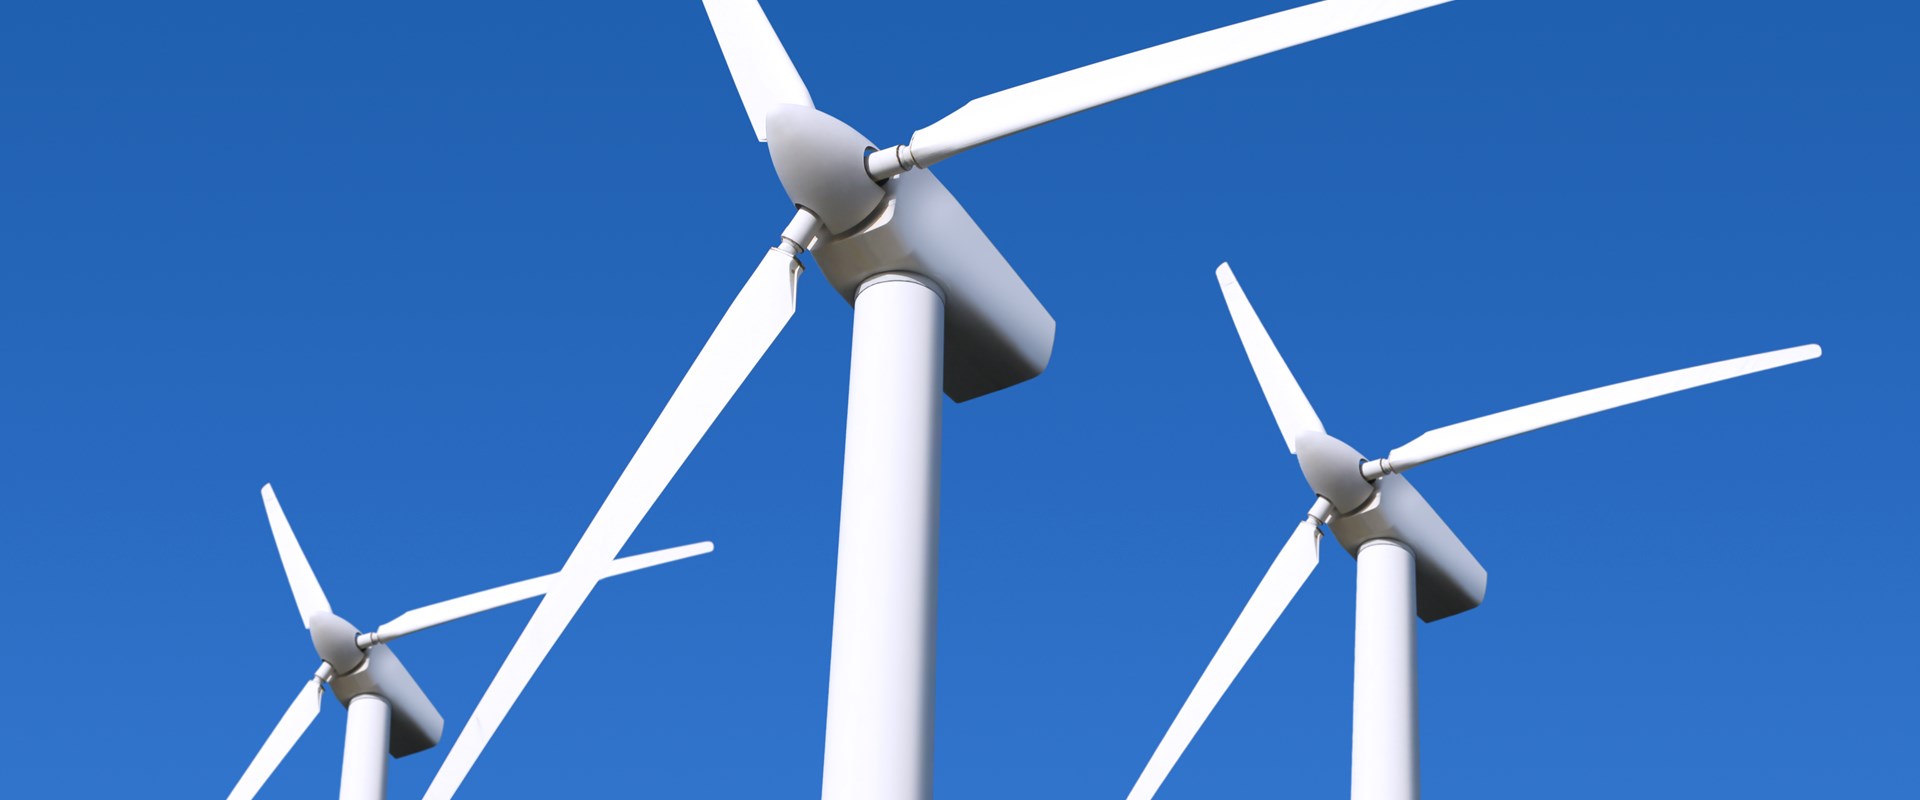 Wind farm turbines in blue sky background